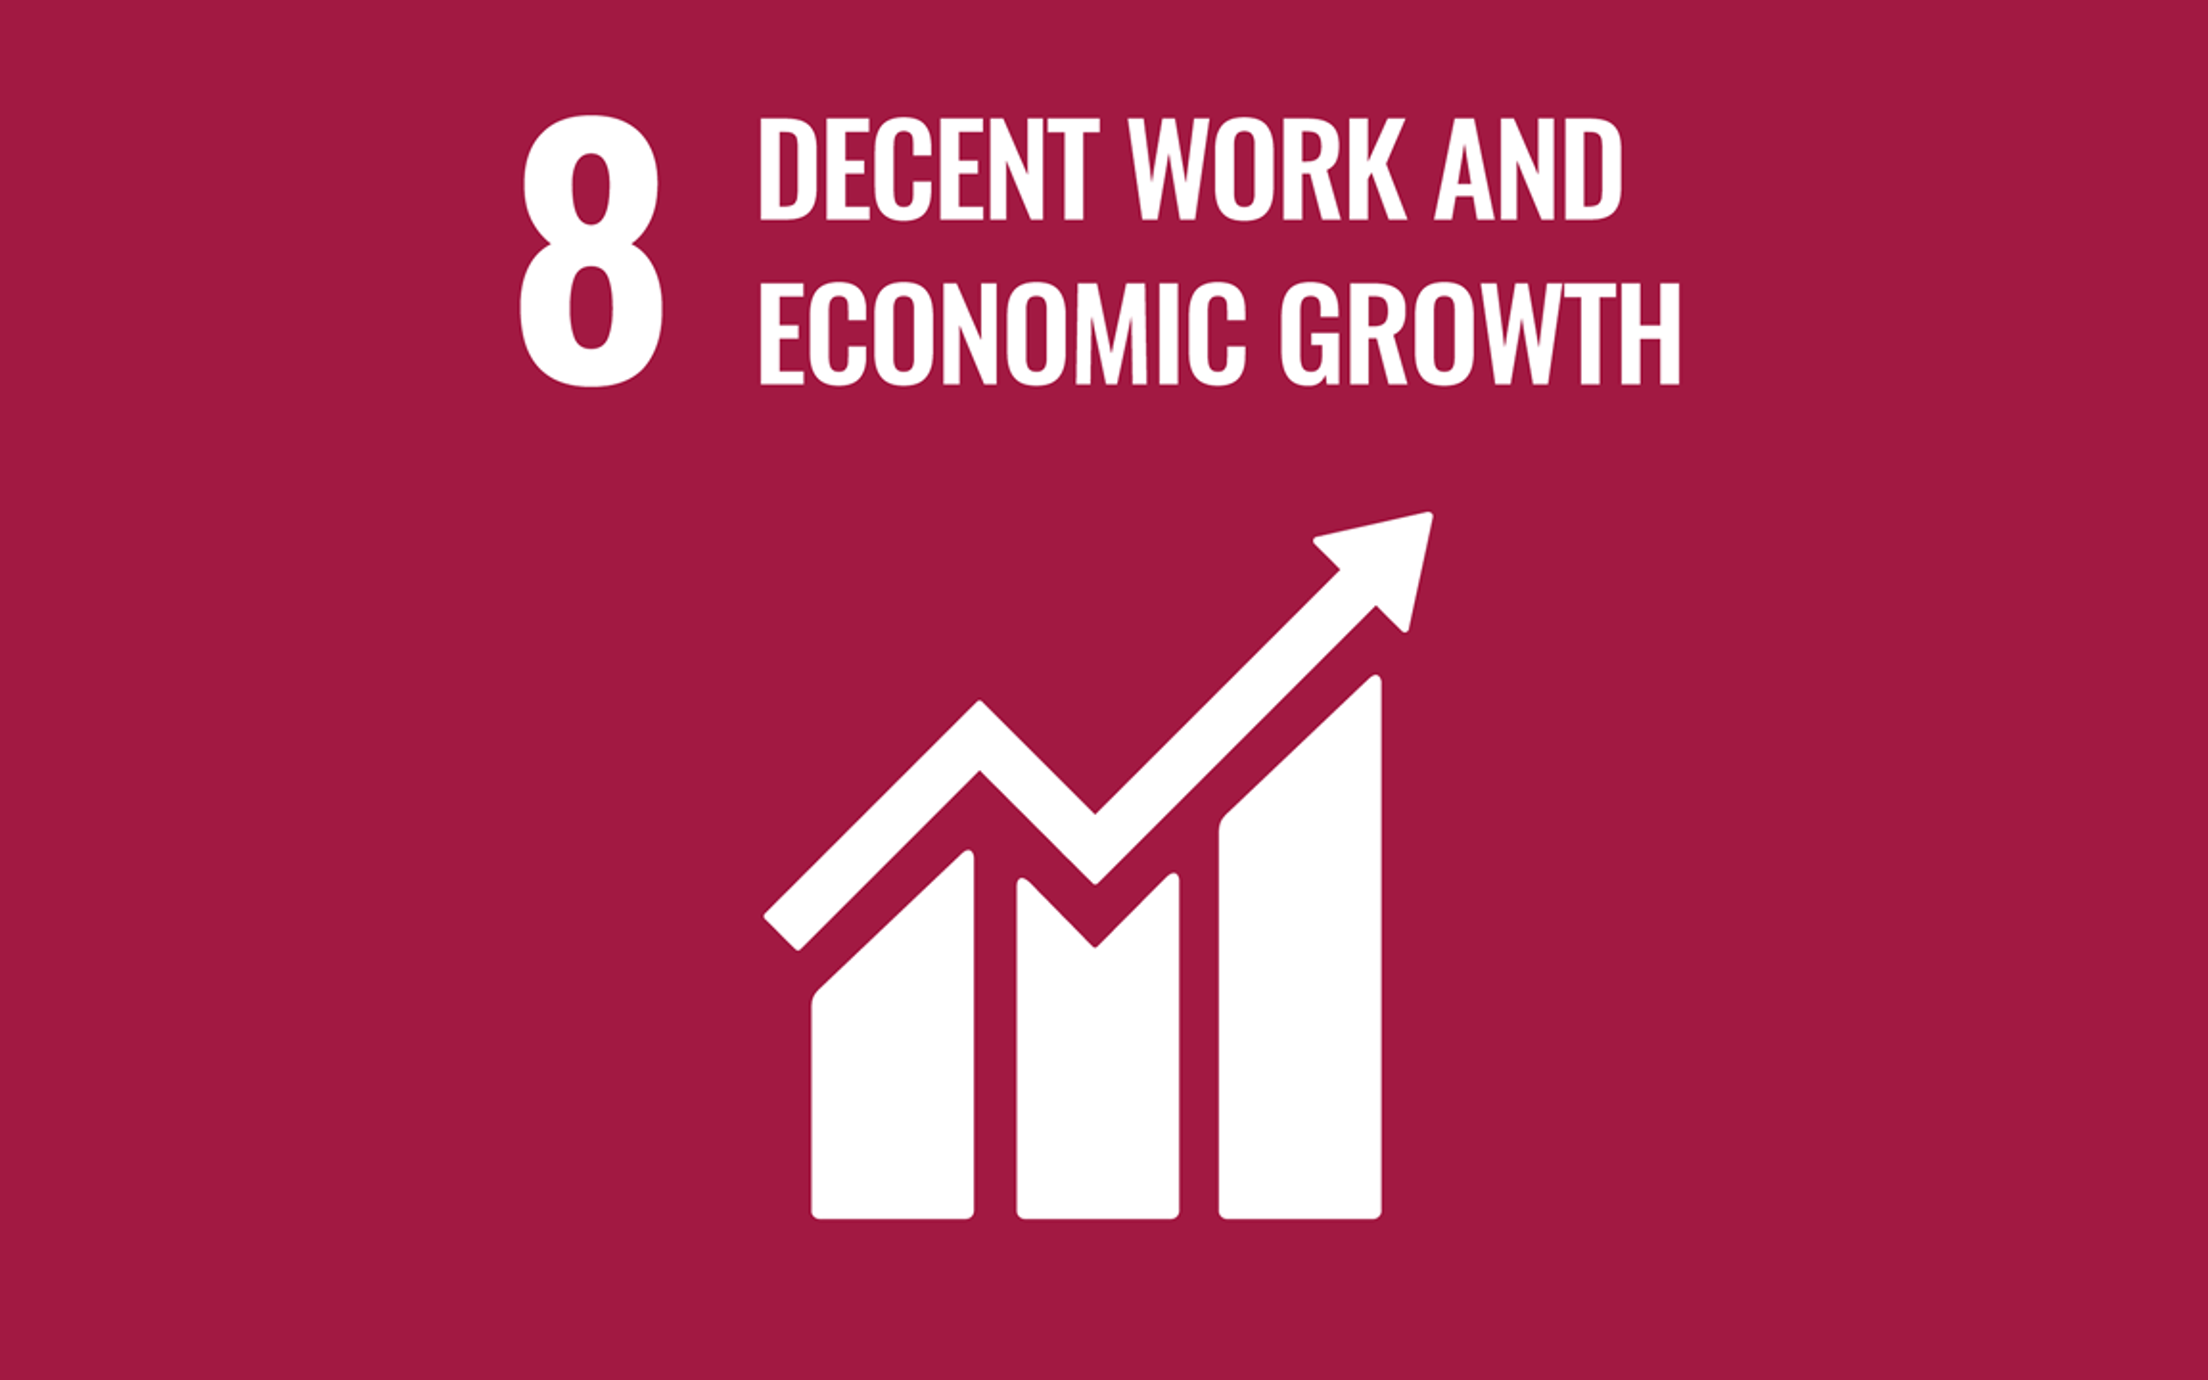 SDG No. 8 – Decent work and economic growth